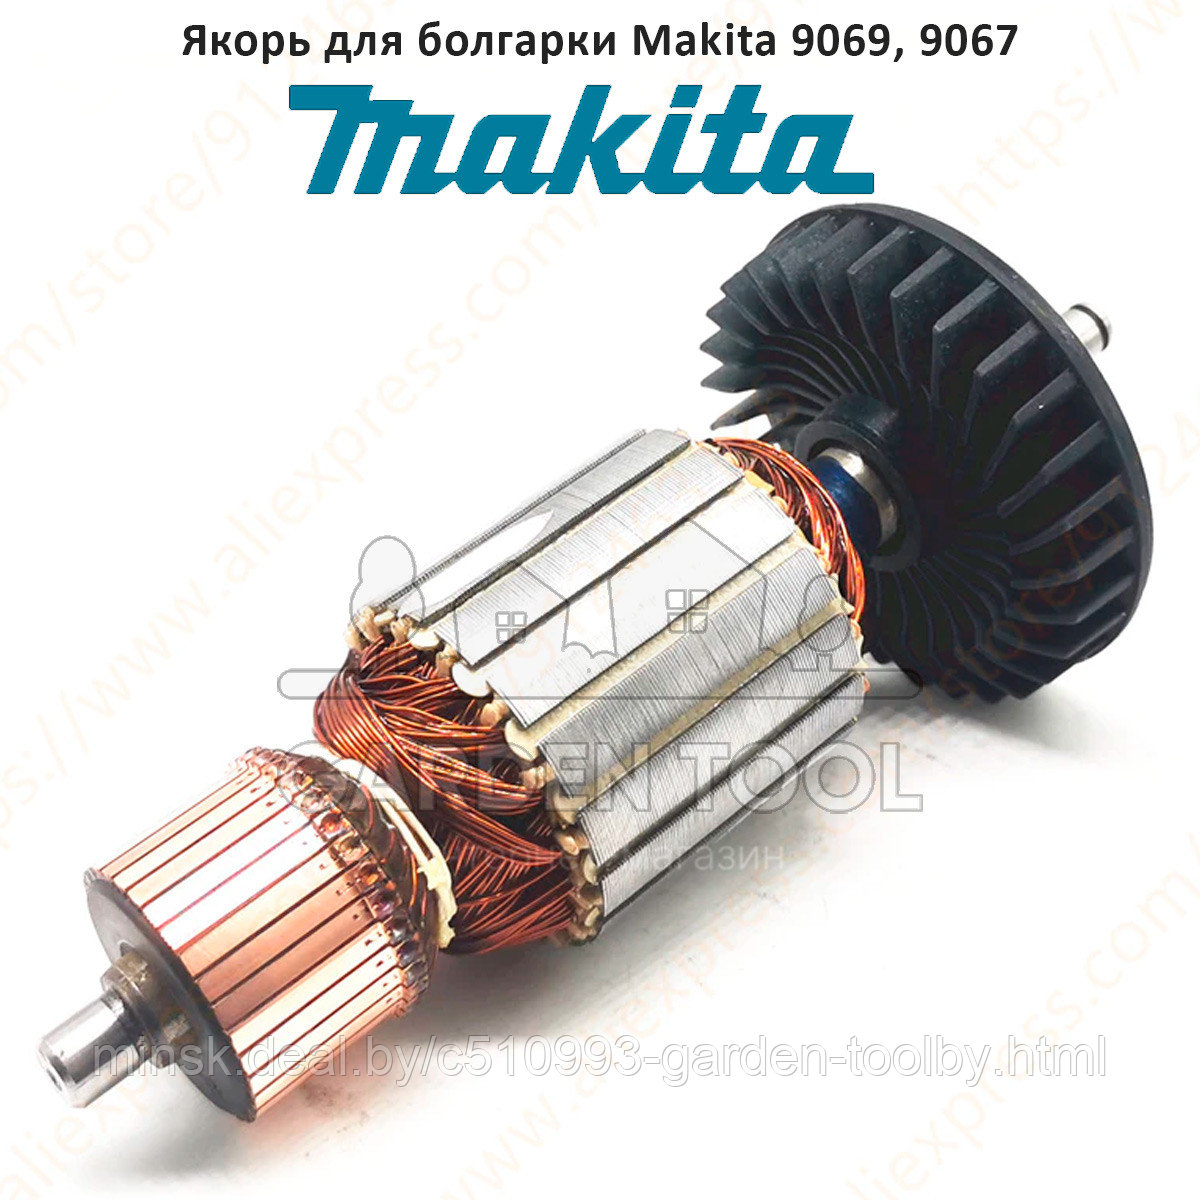 Ротор (якорь) на болгарку (УШМ) Makita 9069, 9067 (516773-0)